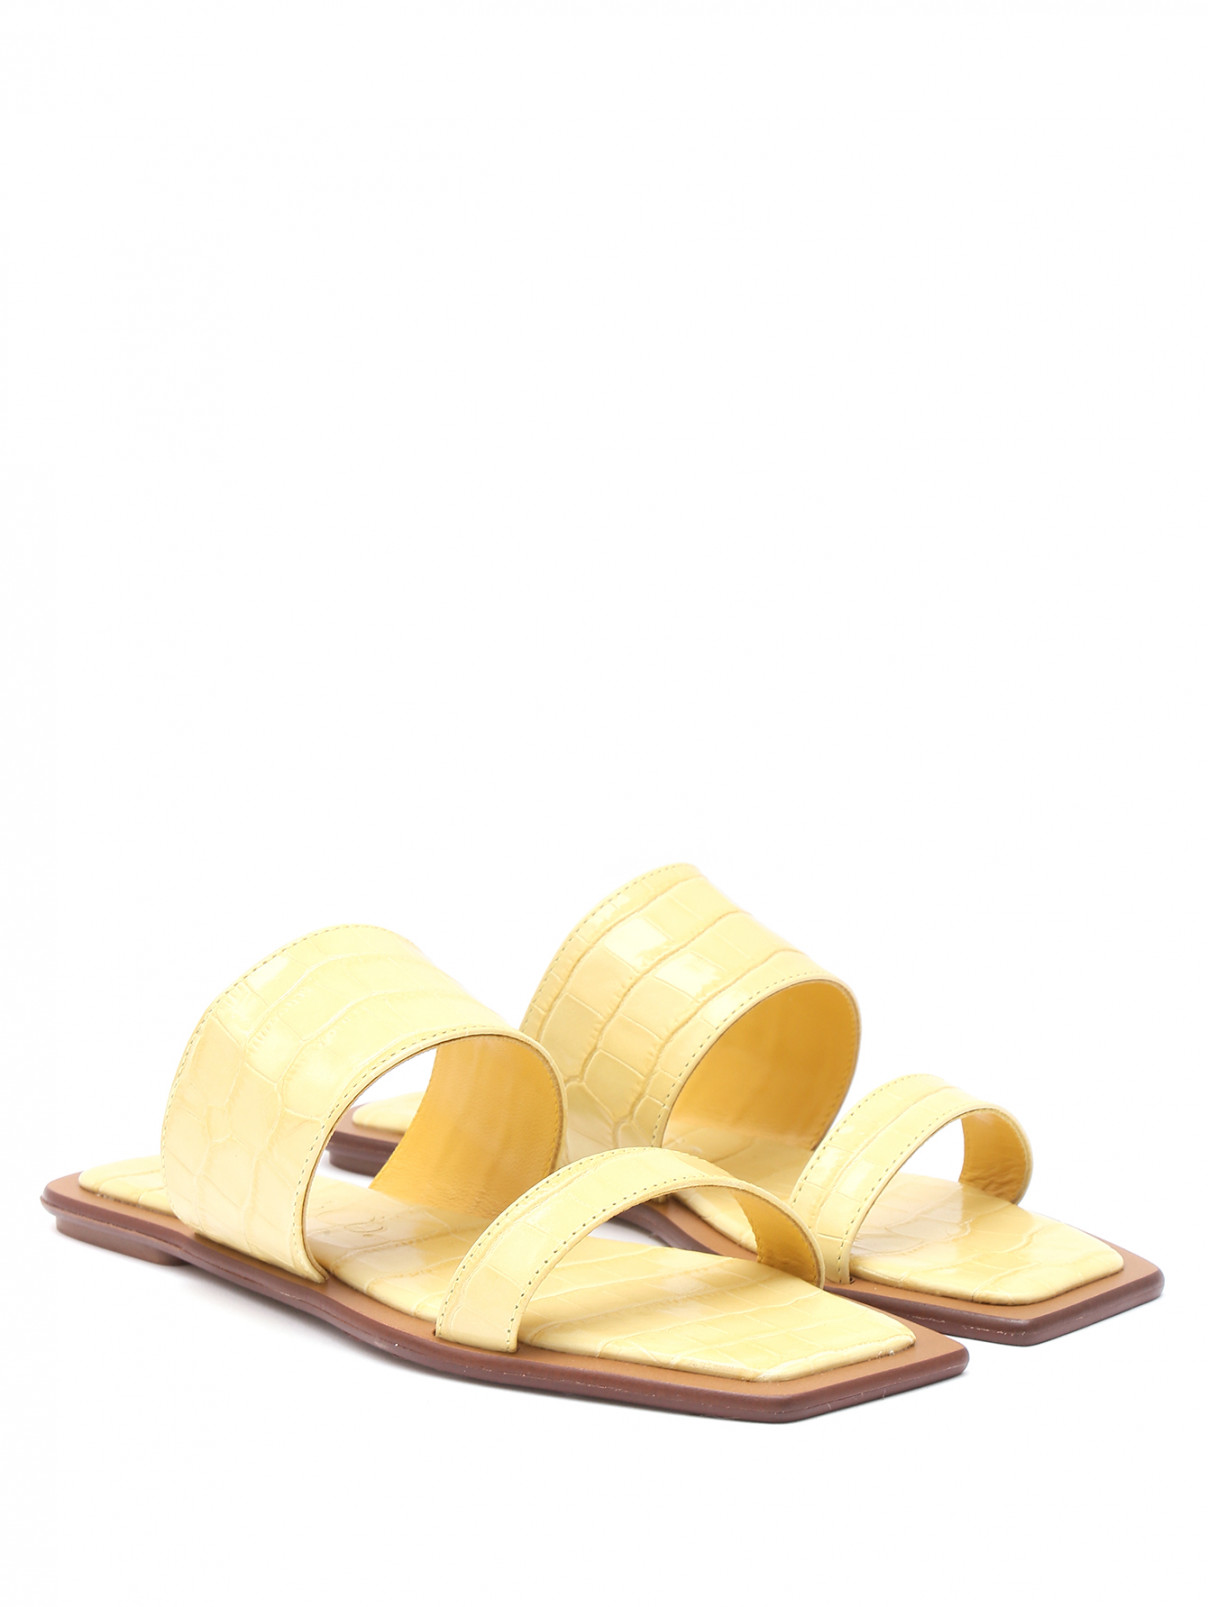 Сандалии из фактурной кожи Max&Co  –  Общий вид  – Цвет:  Желтый